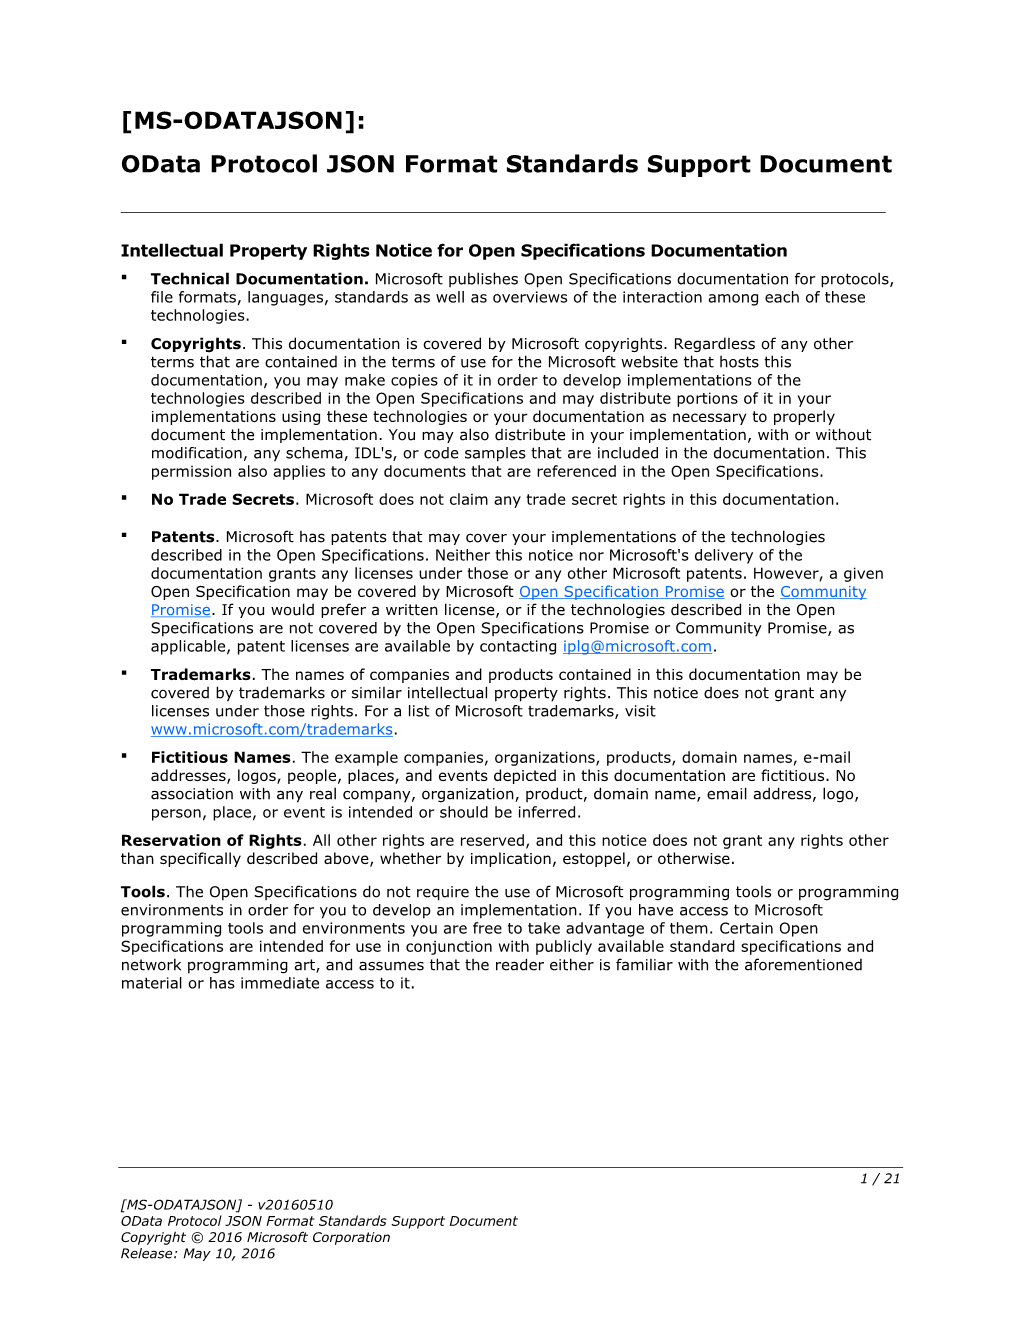 Odata Protocol JSON Format Standards Support Document